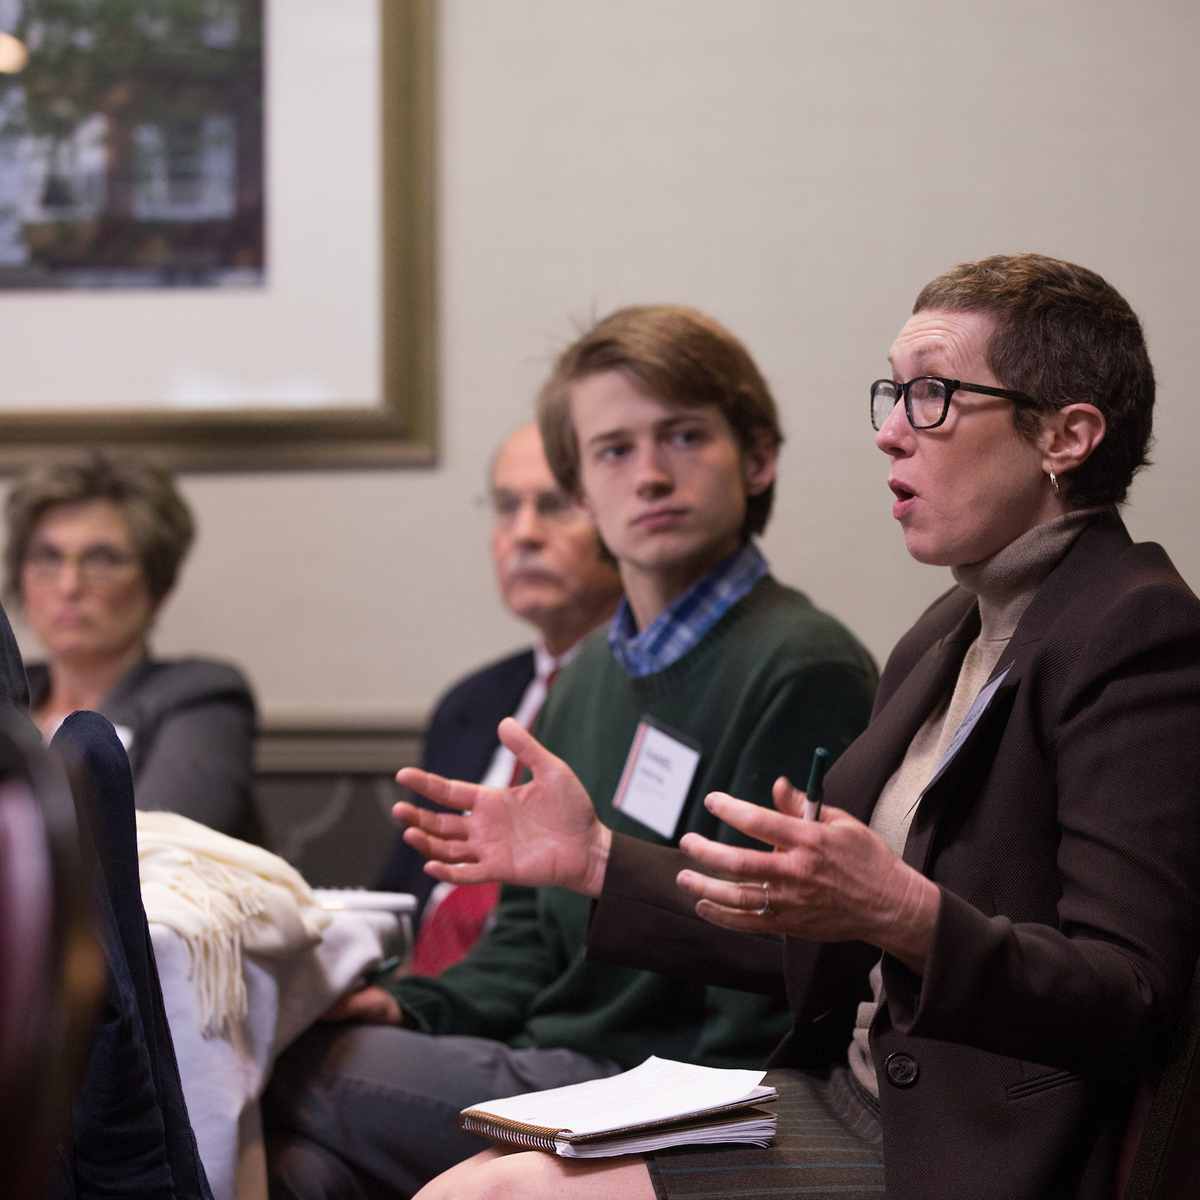 Local social work professionals visit Ohio University for a symposium